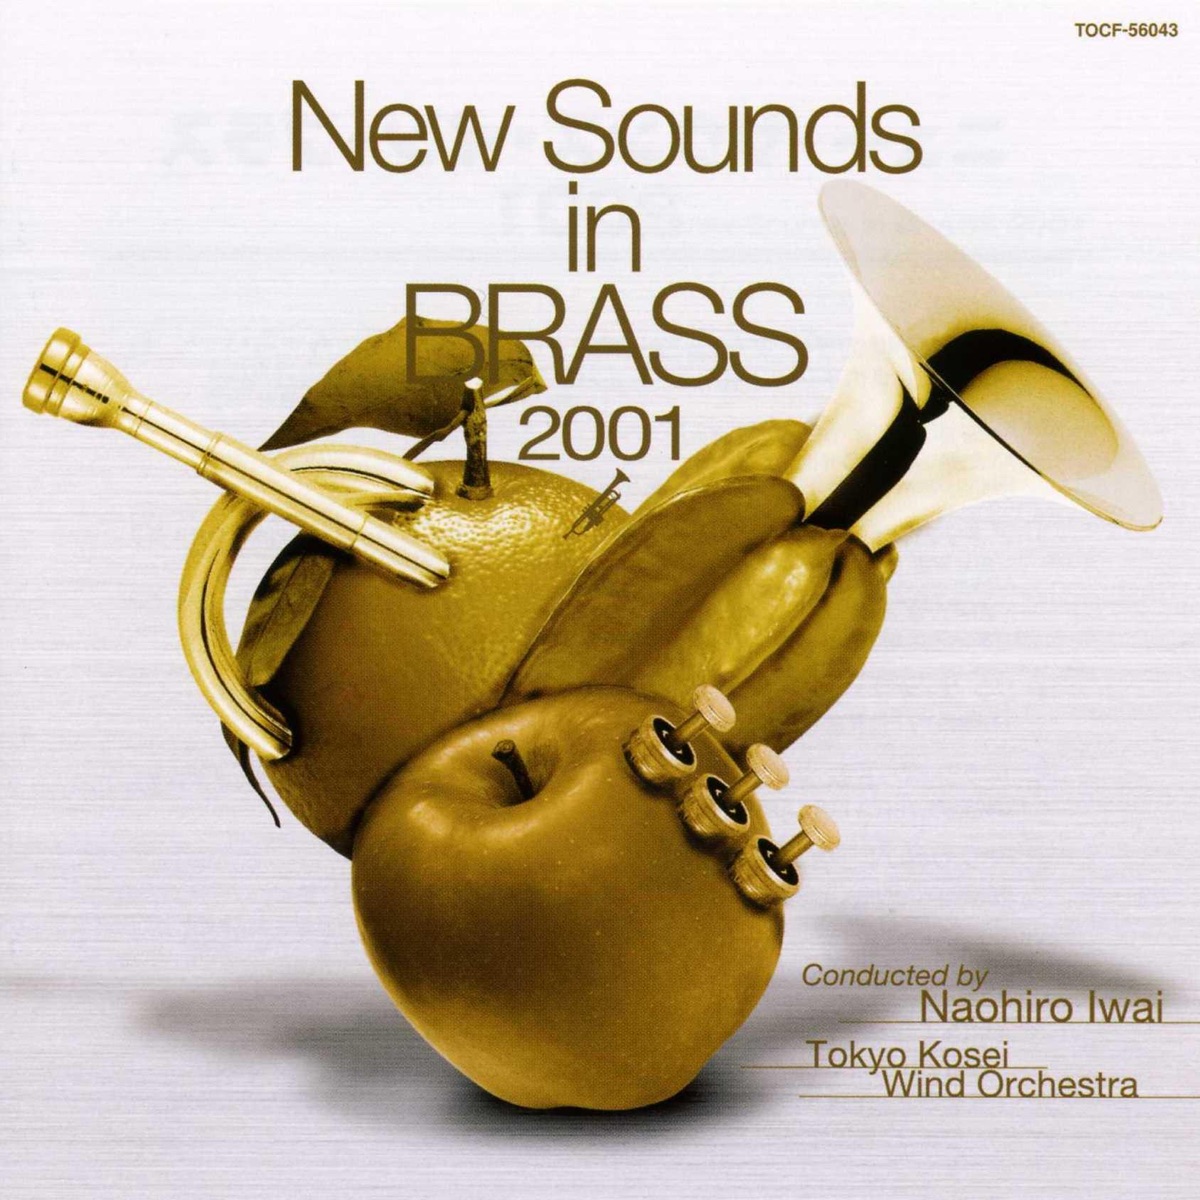 New Sounds In Brass 2001 - Album by Naohiro Iwai - Apple Music